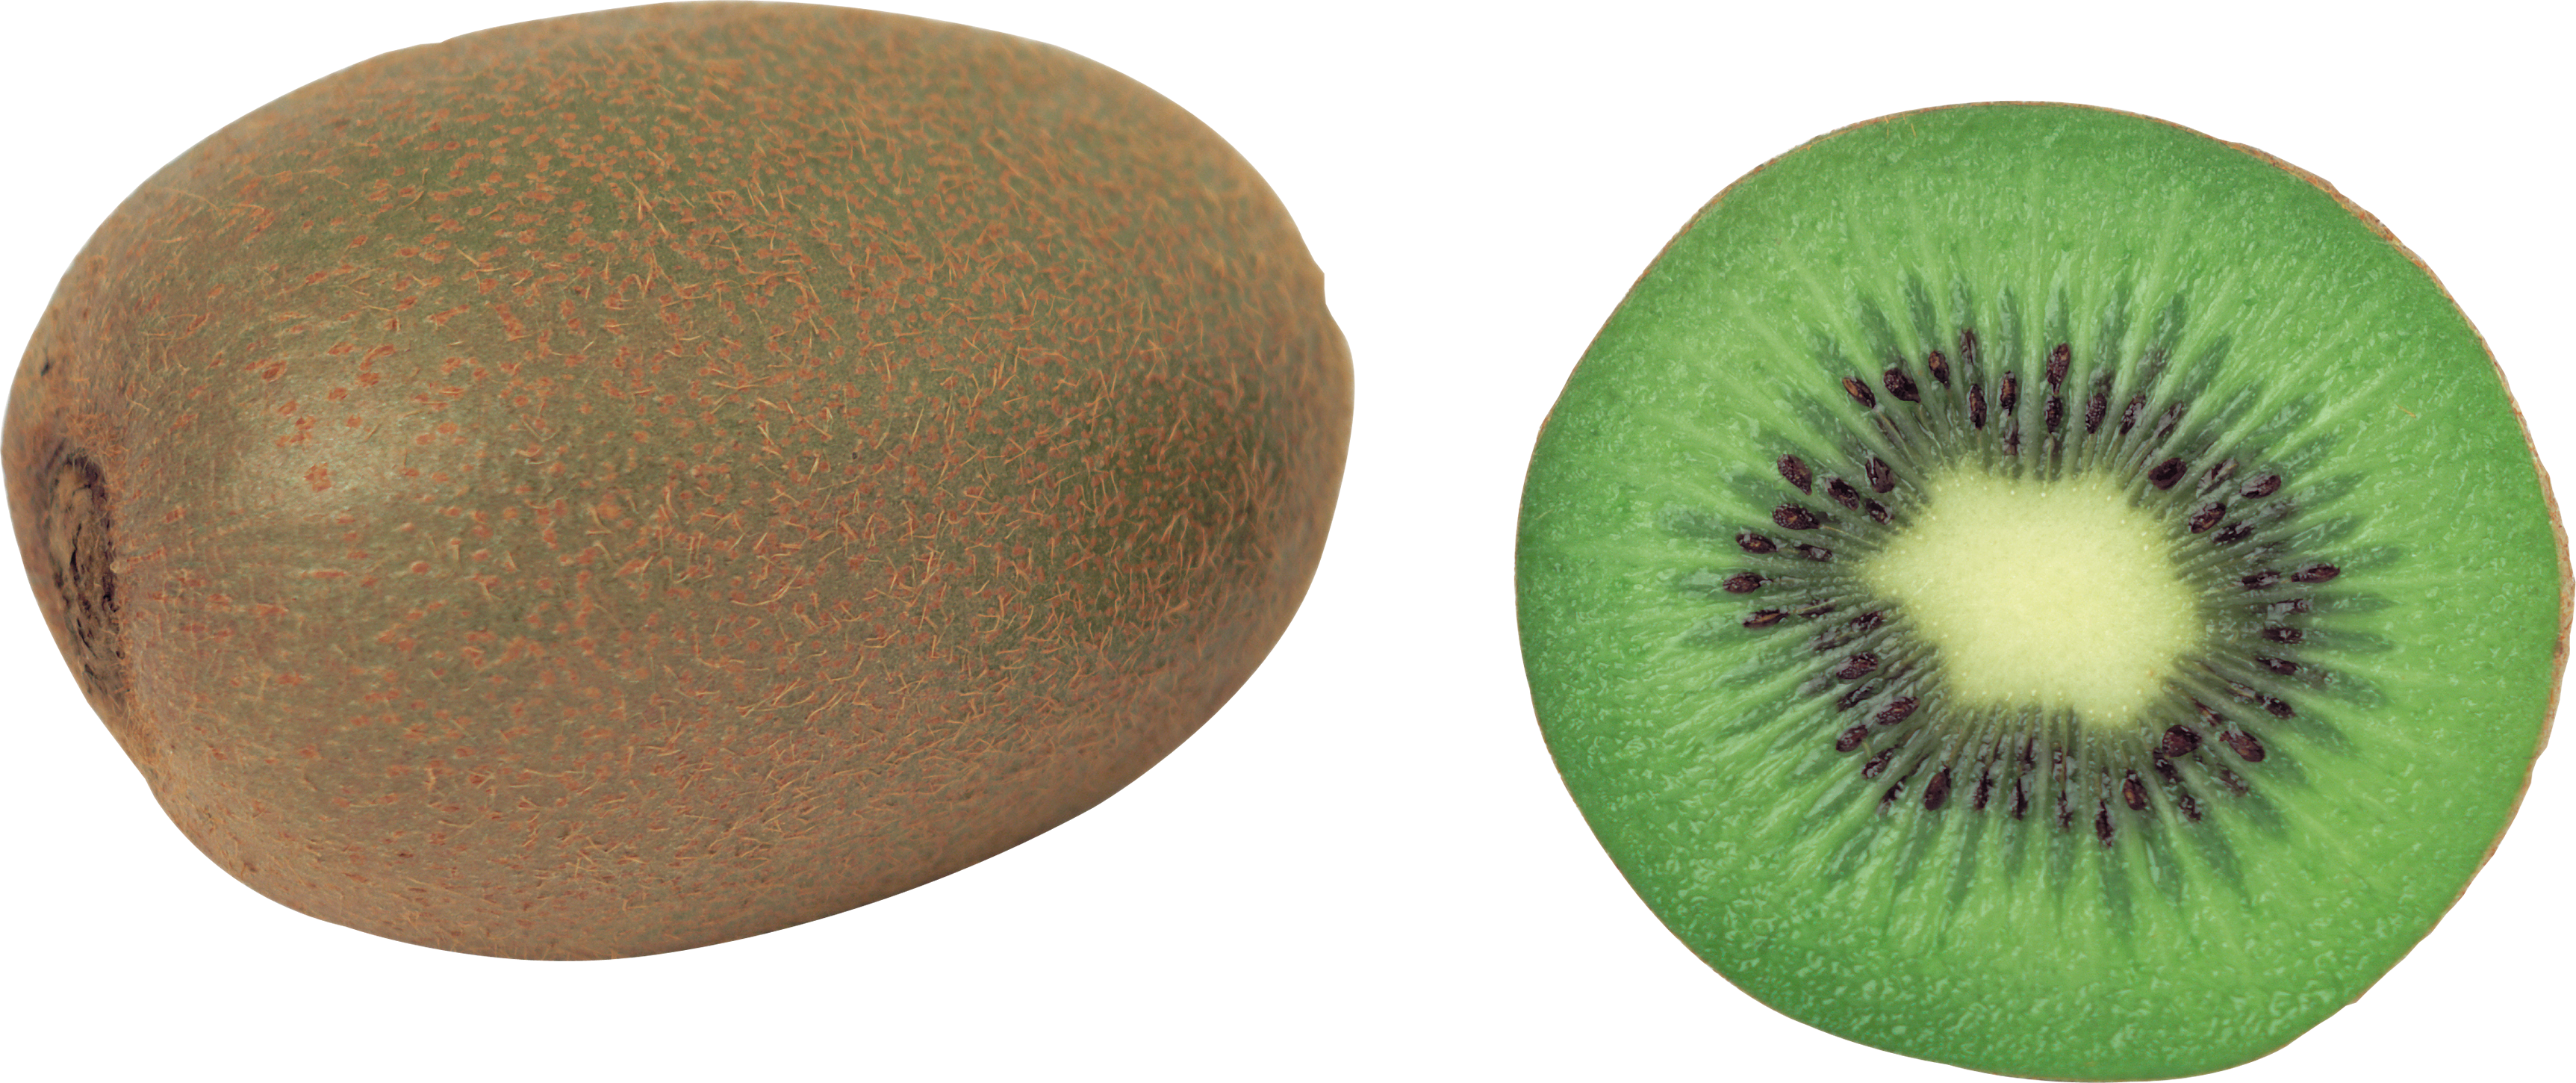 Quả kiwi